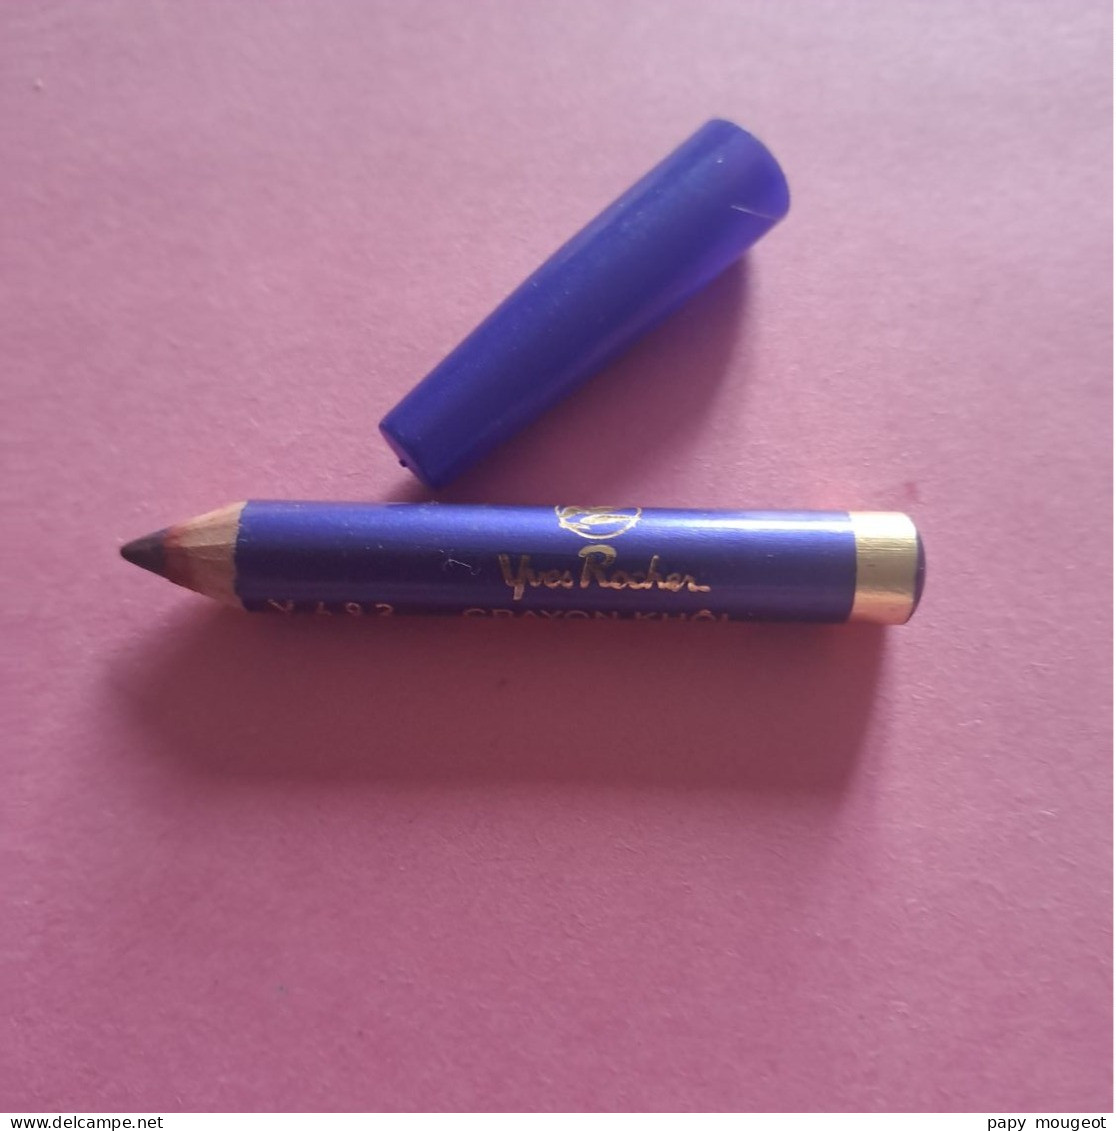 Crayon Khöl Y 482 Violet Des Andes Yves Rocher - Prodotti Di Bellezza